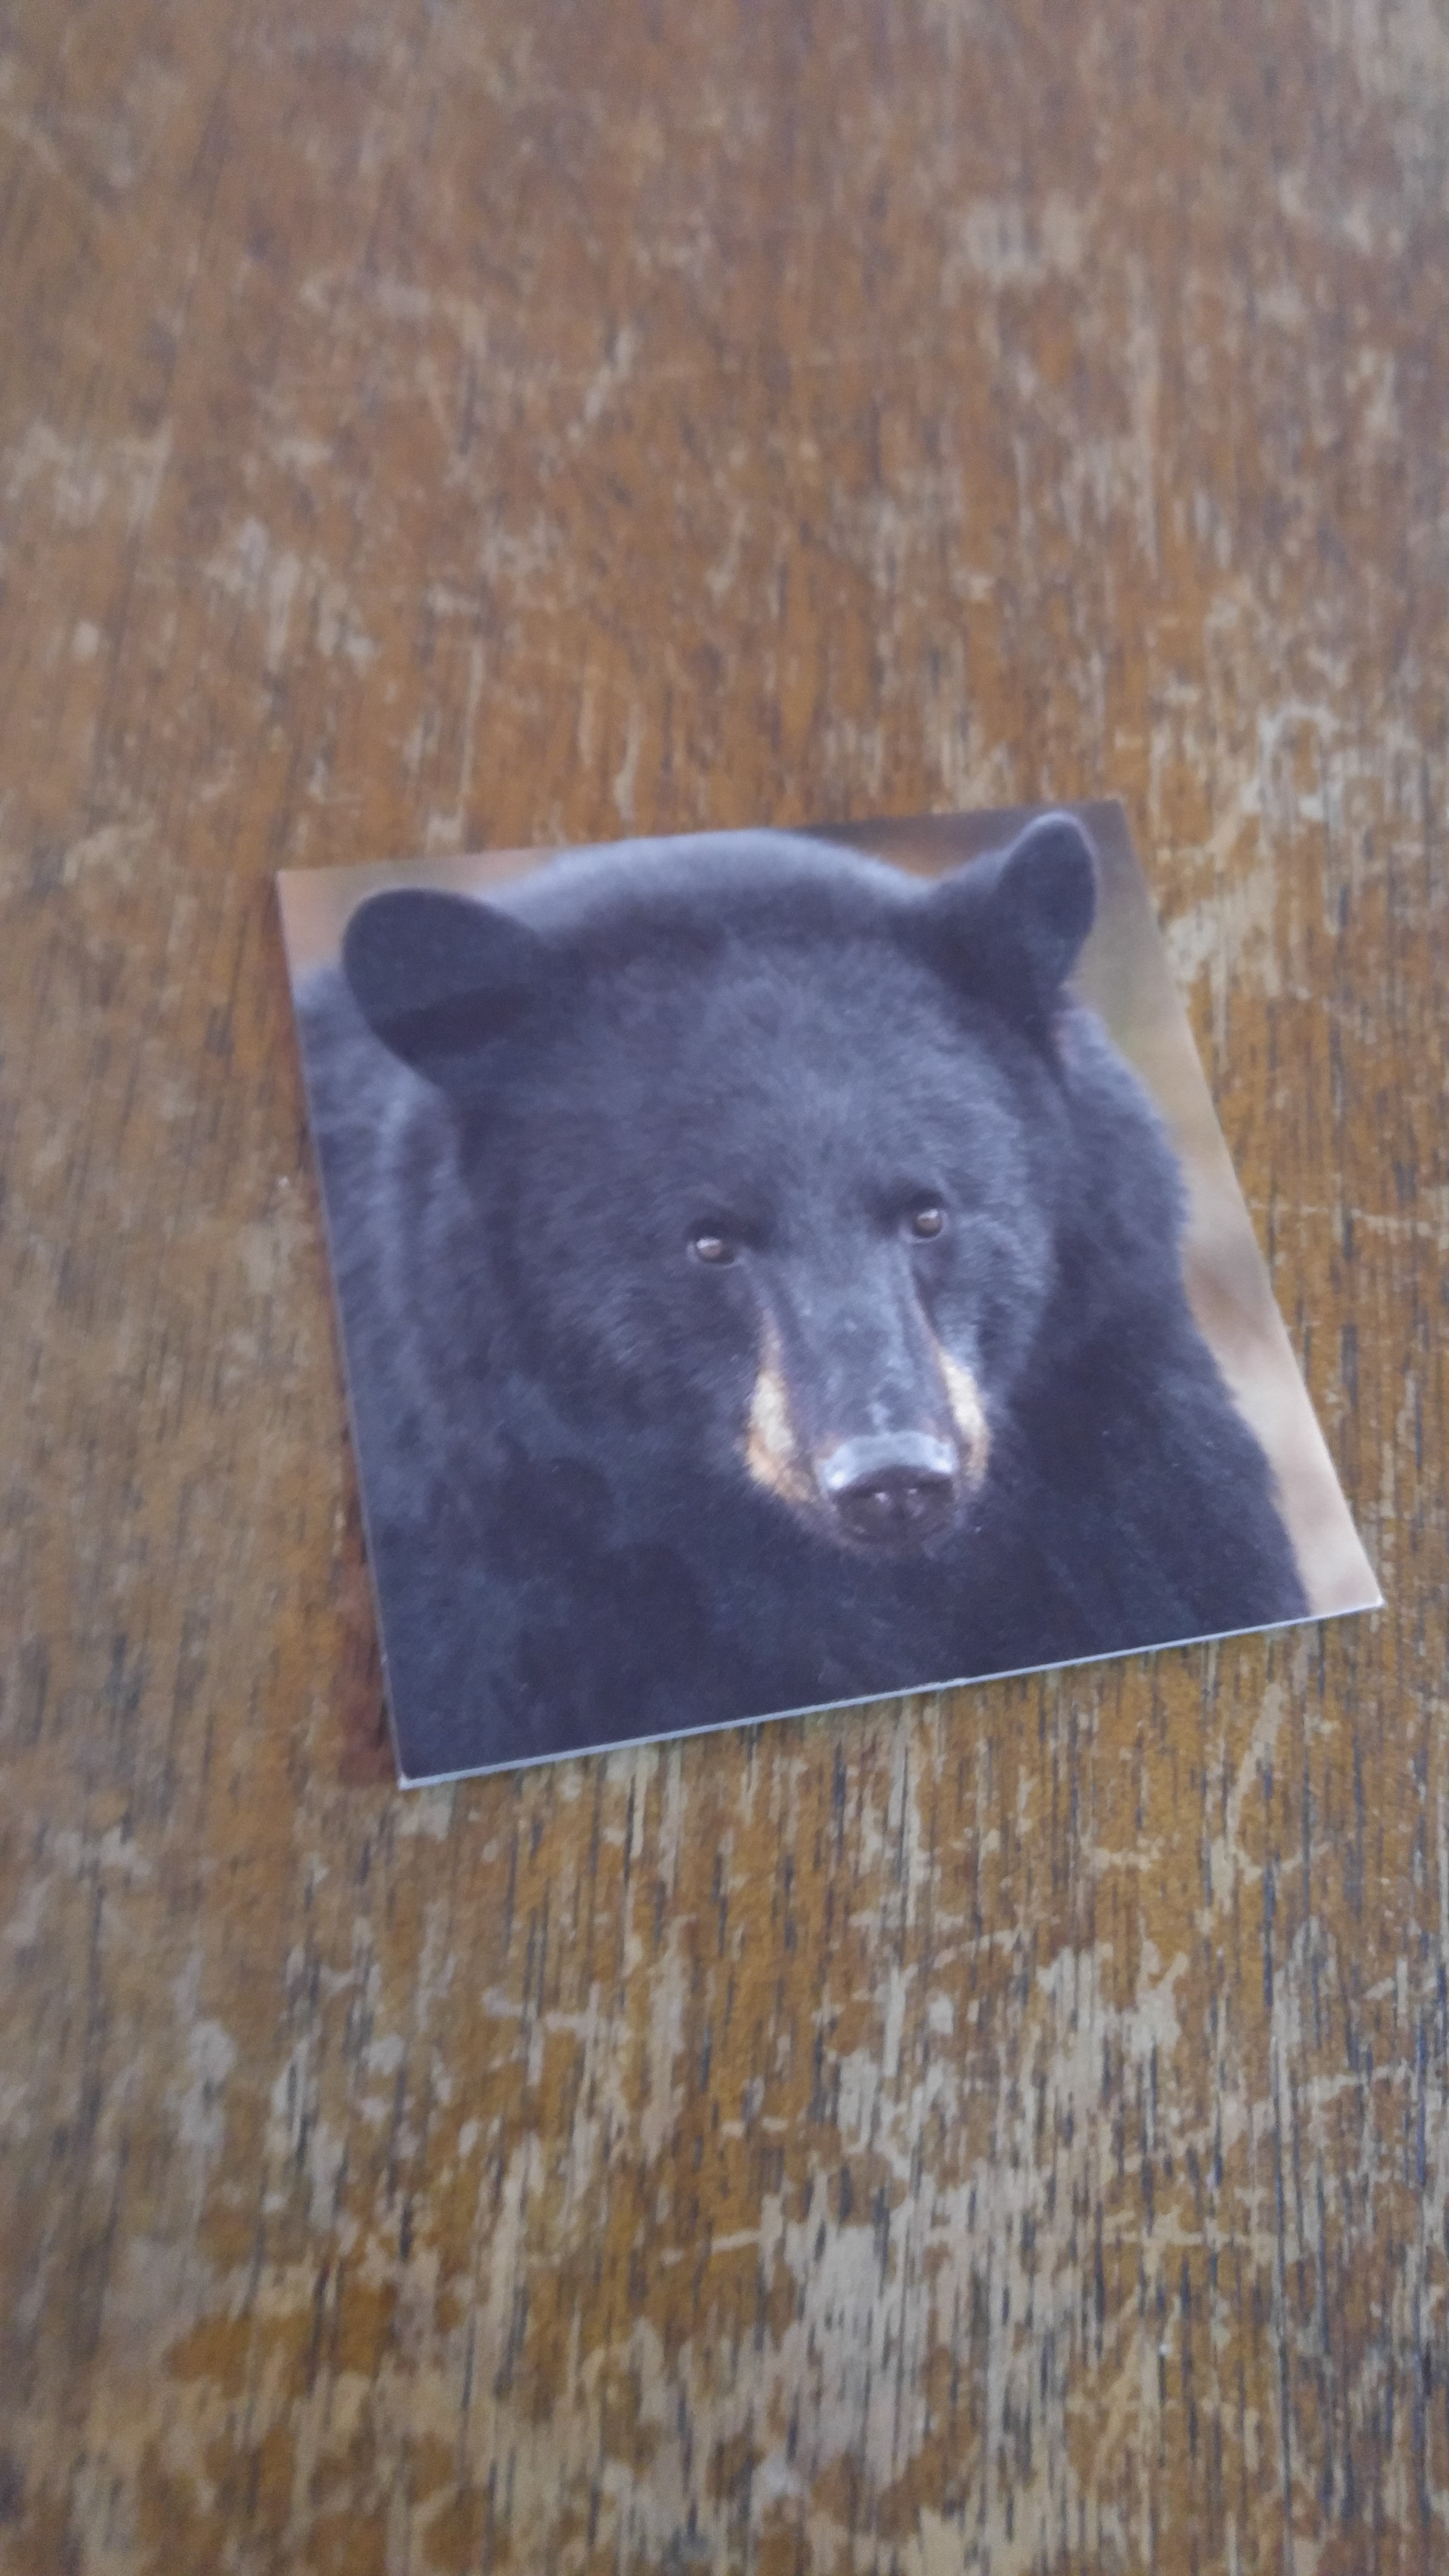 A photo of a closeup of a black bear.